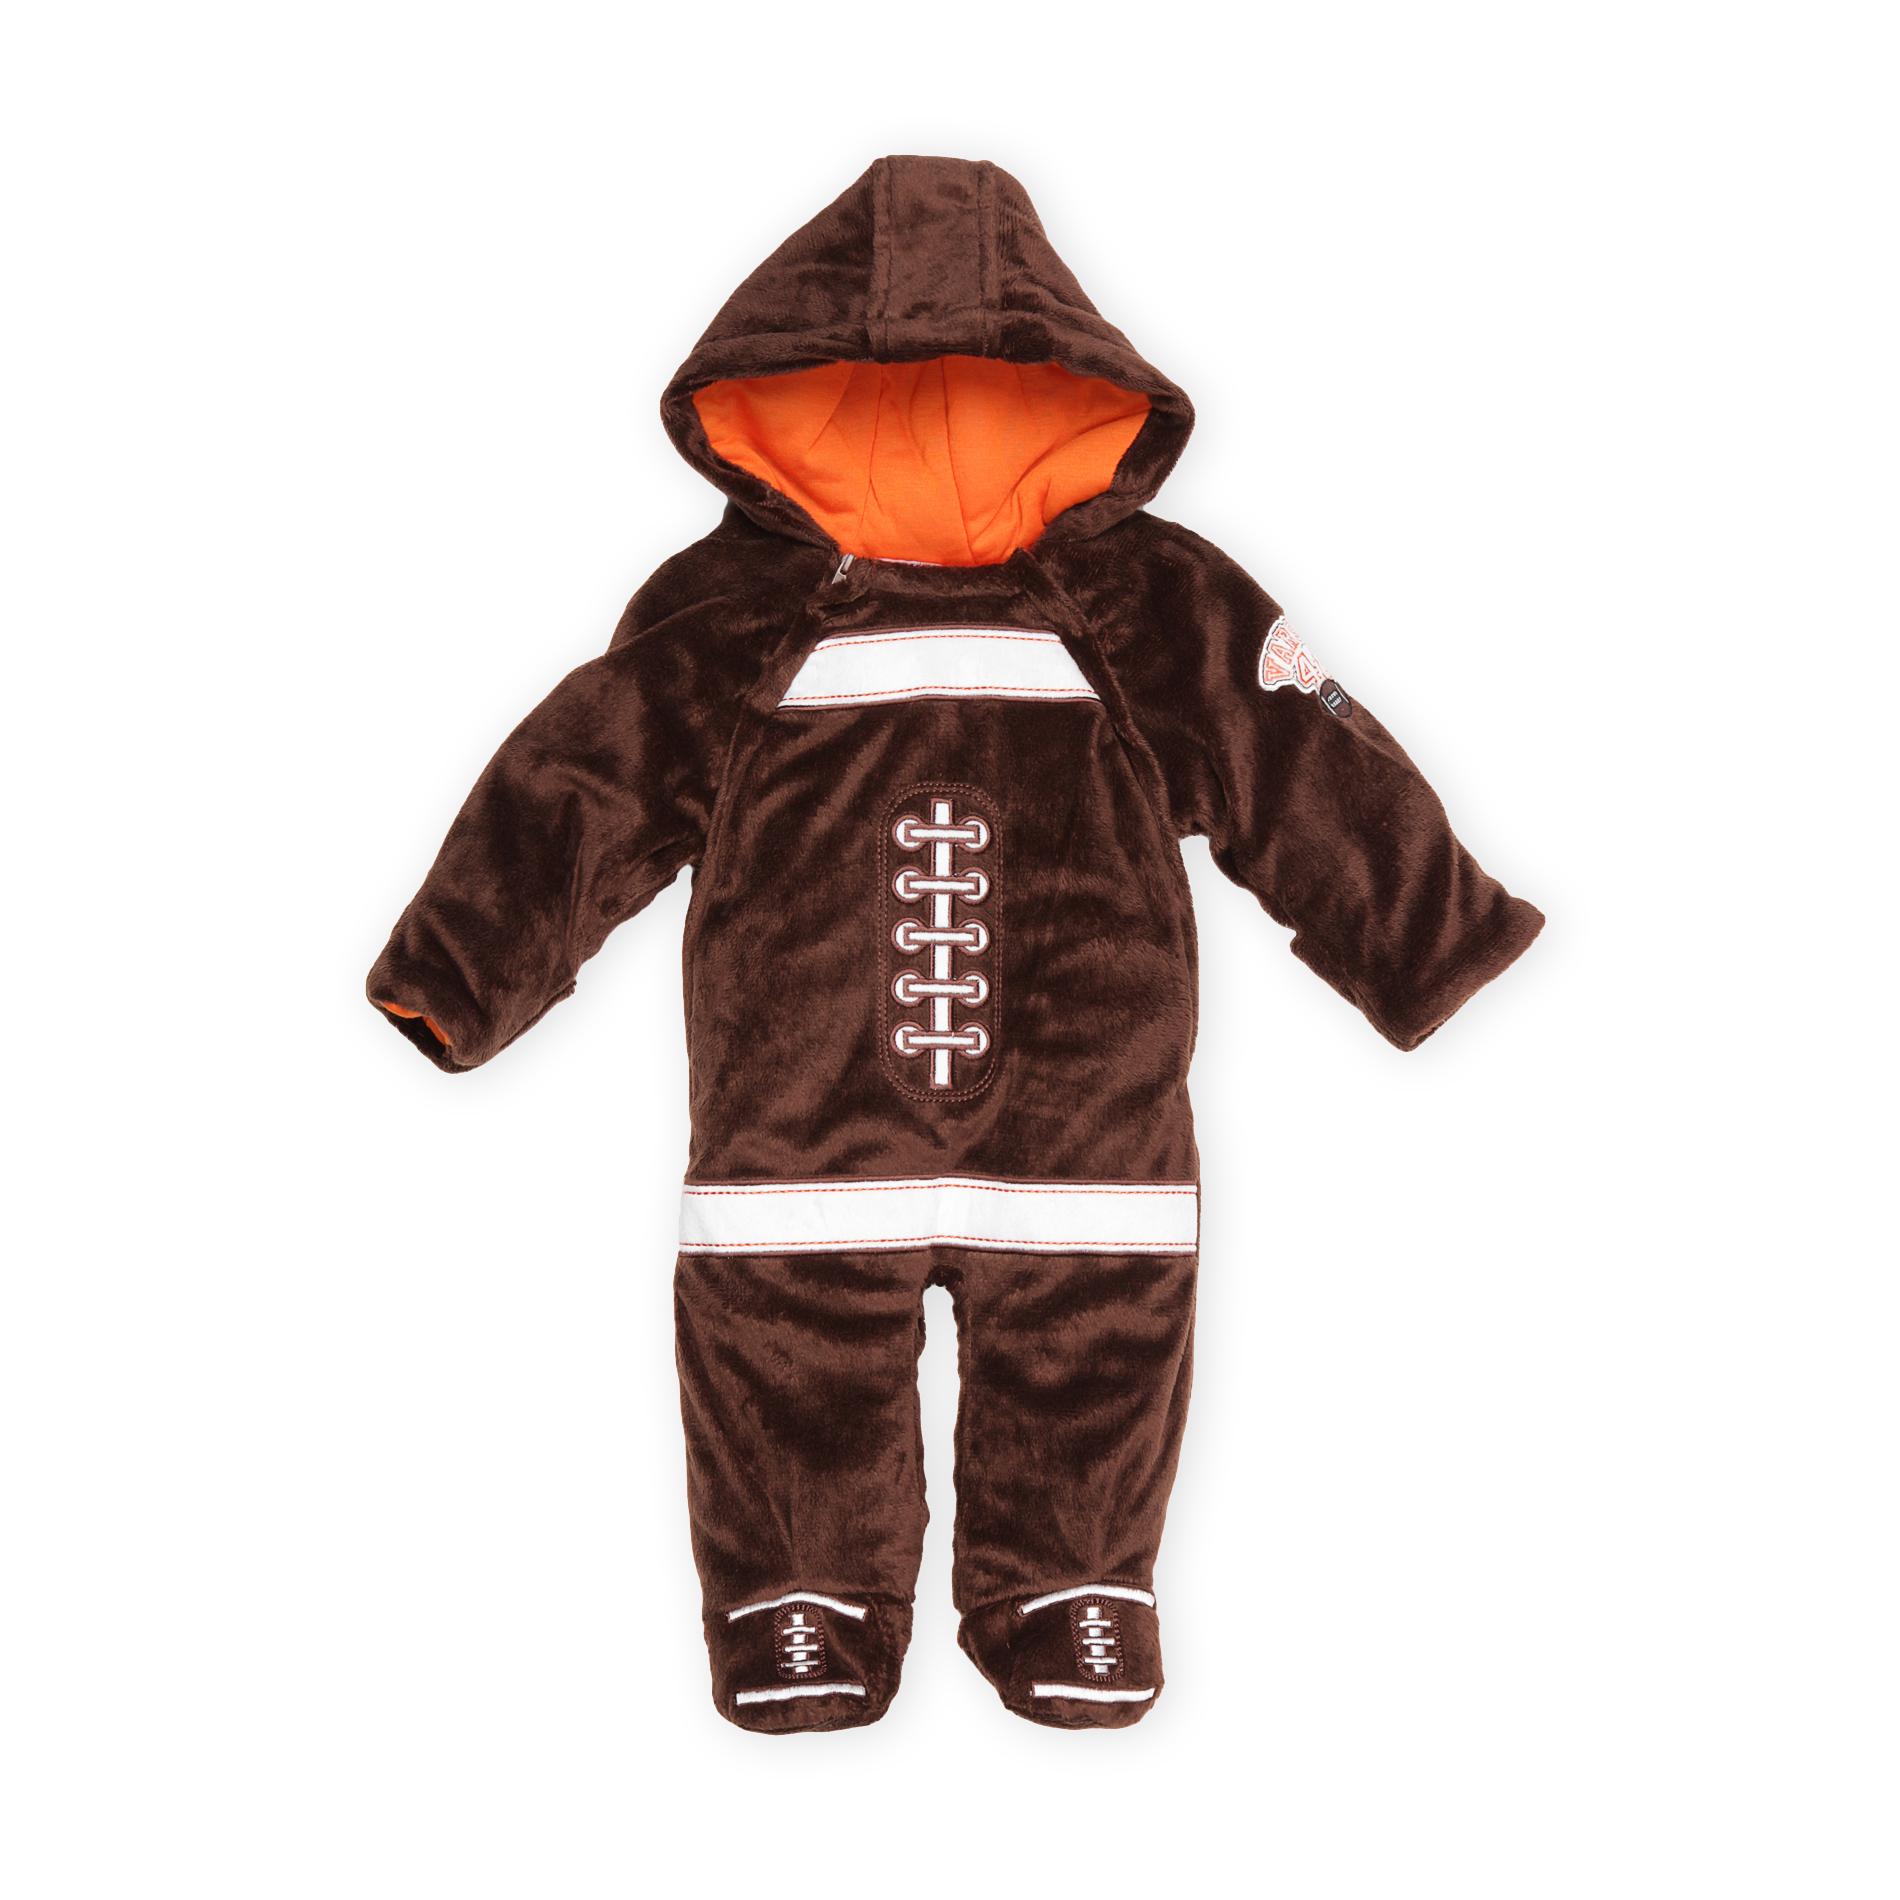 Small Wonders Infant Boy's Footed Fleece Sleeper Costume - Football